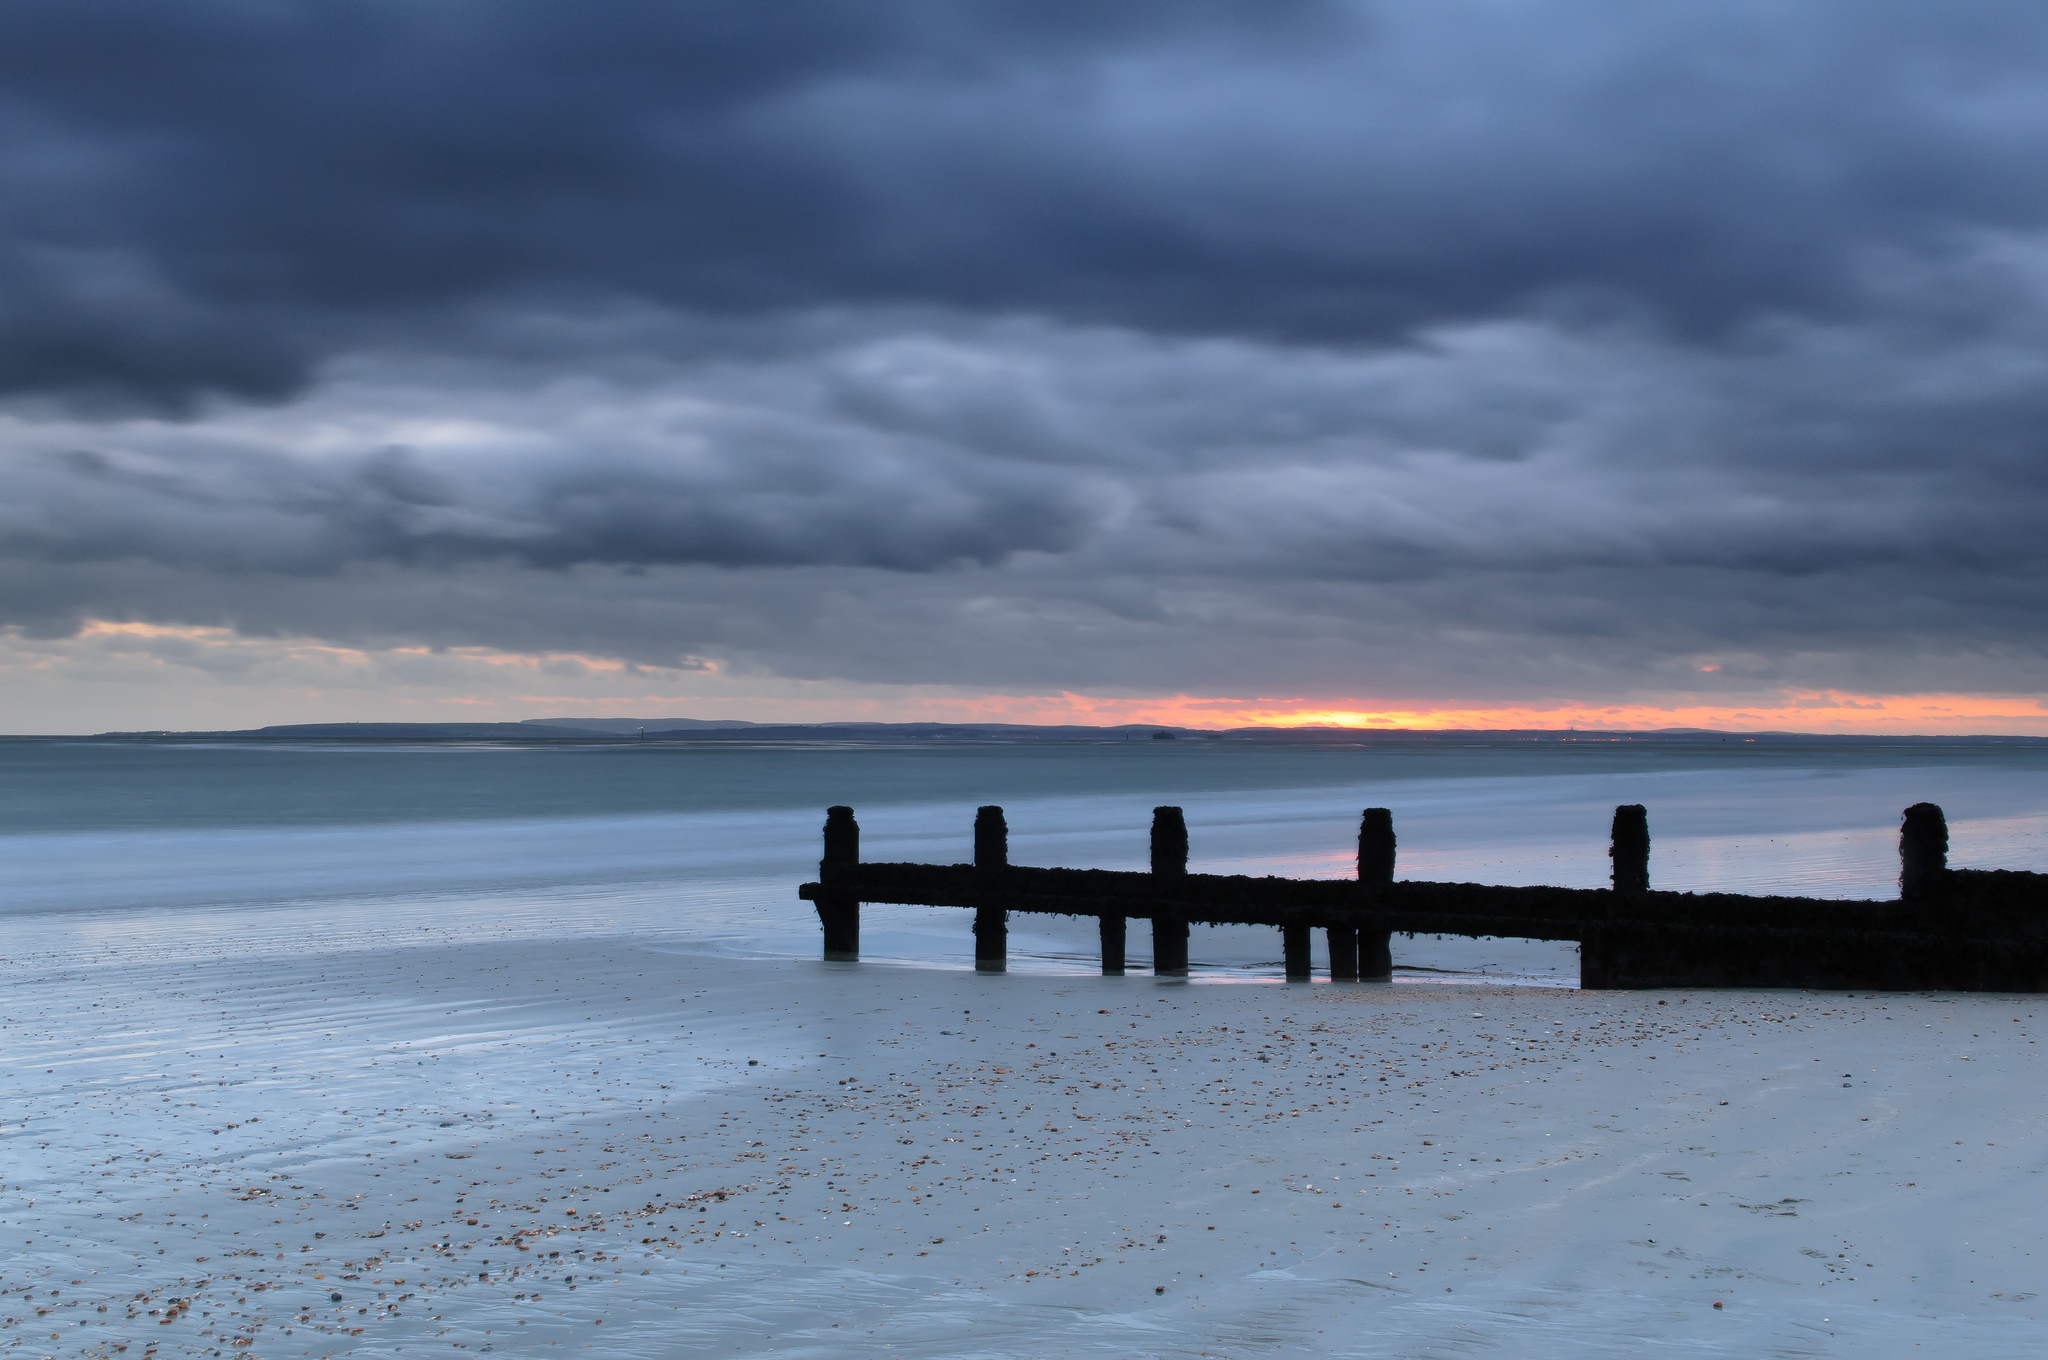 uk, England, Sea, Beach, Sand, Bearings, Evening, Sunset, Sky, Clouds Wallpaper